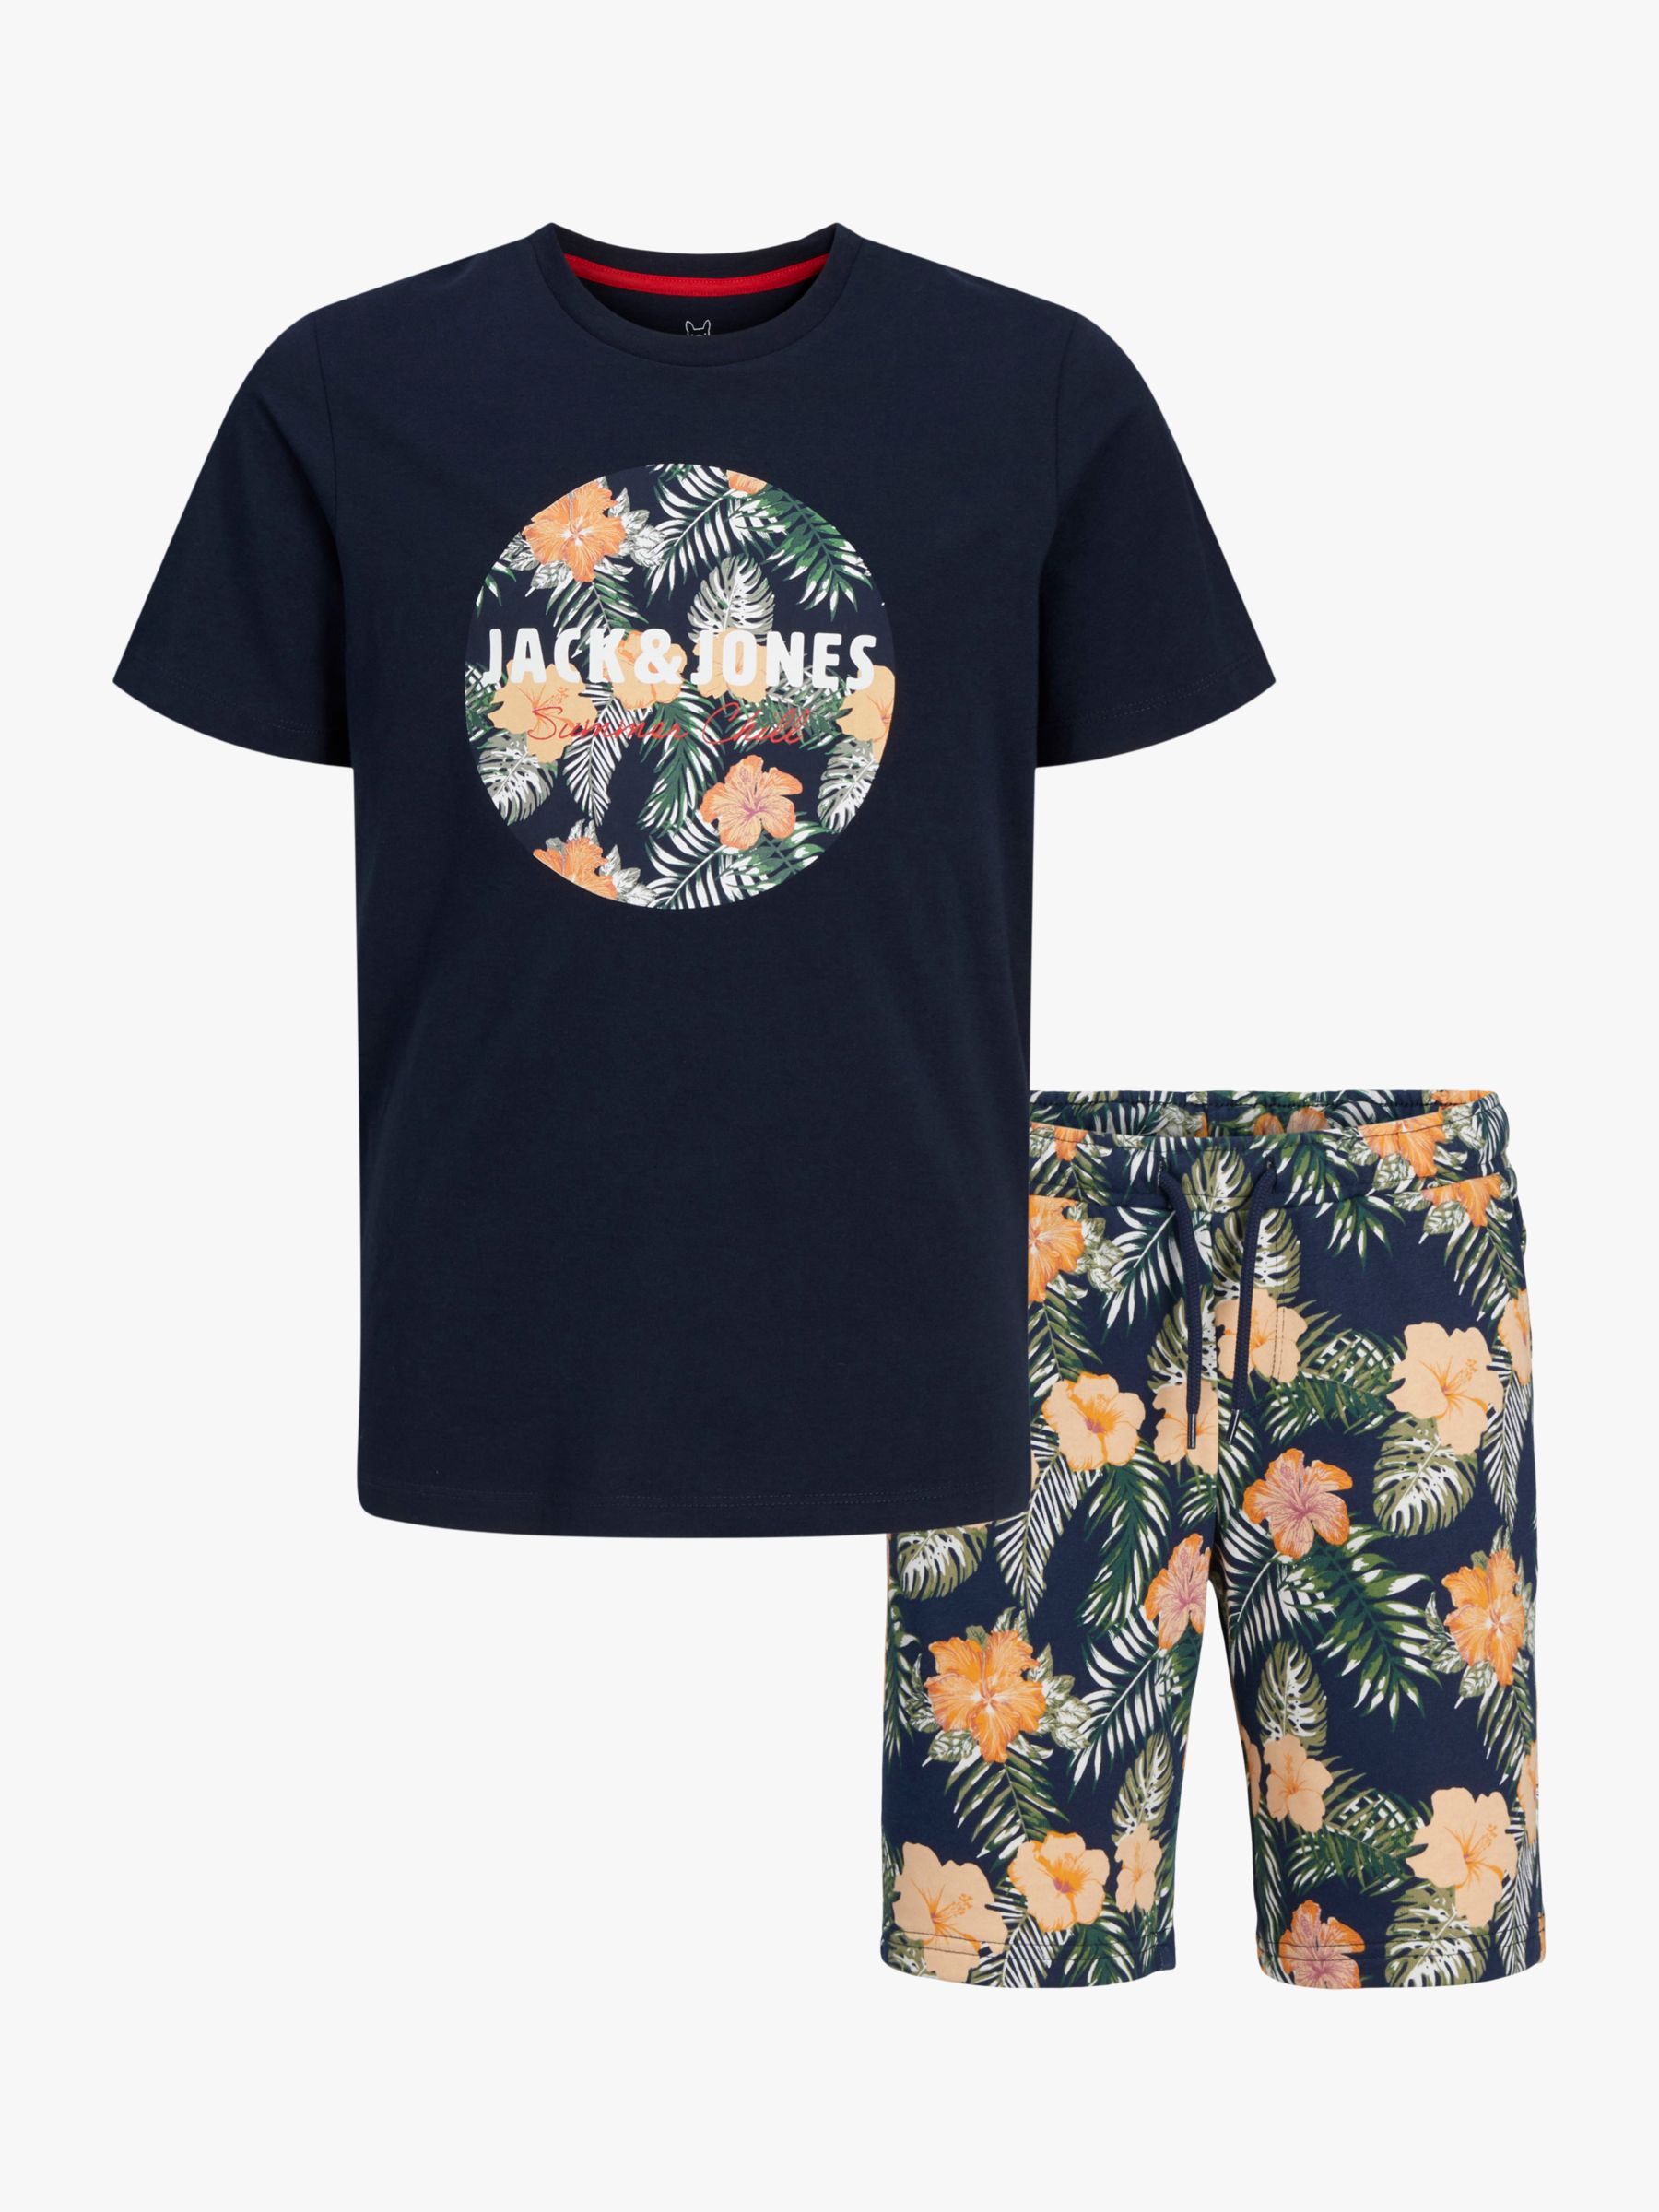 Jack & Jones Kids' Chill Shape Logo Floral Print T-Shirt & Shorts Set, Navy, 16 years